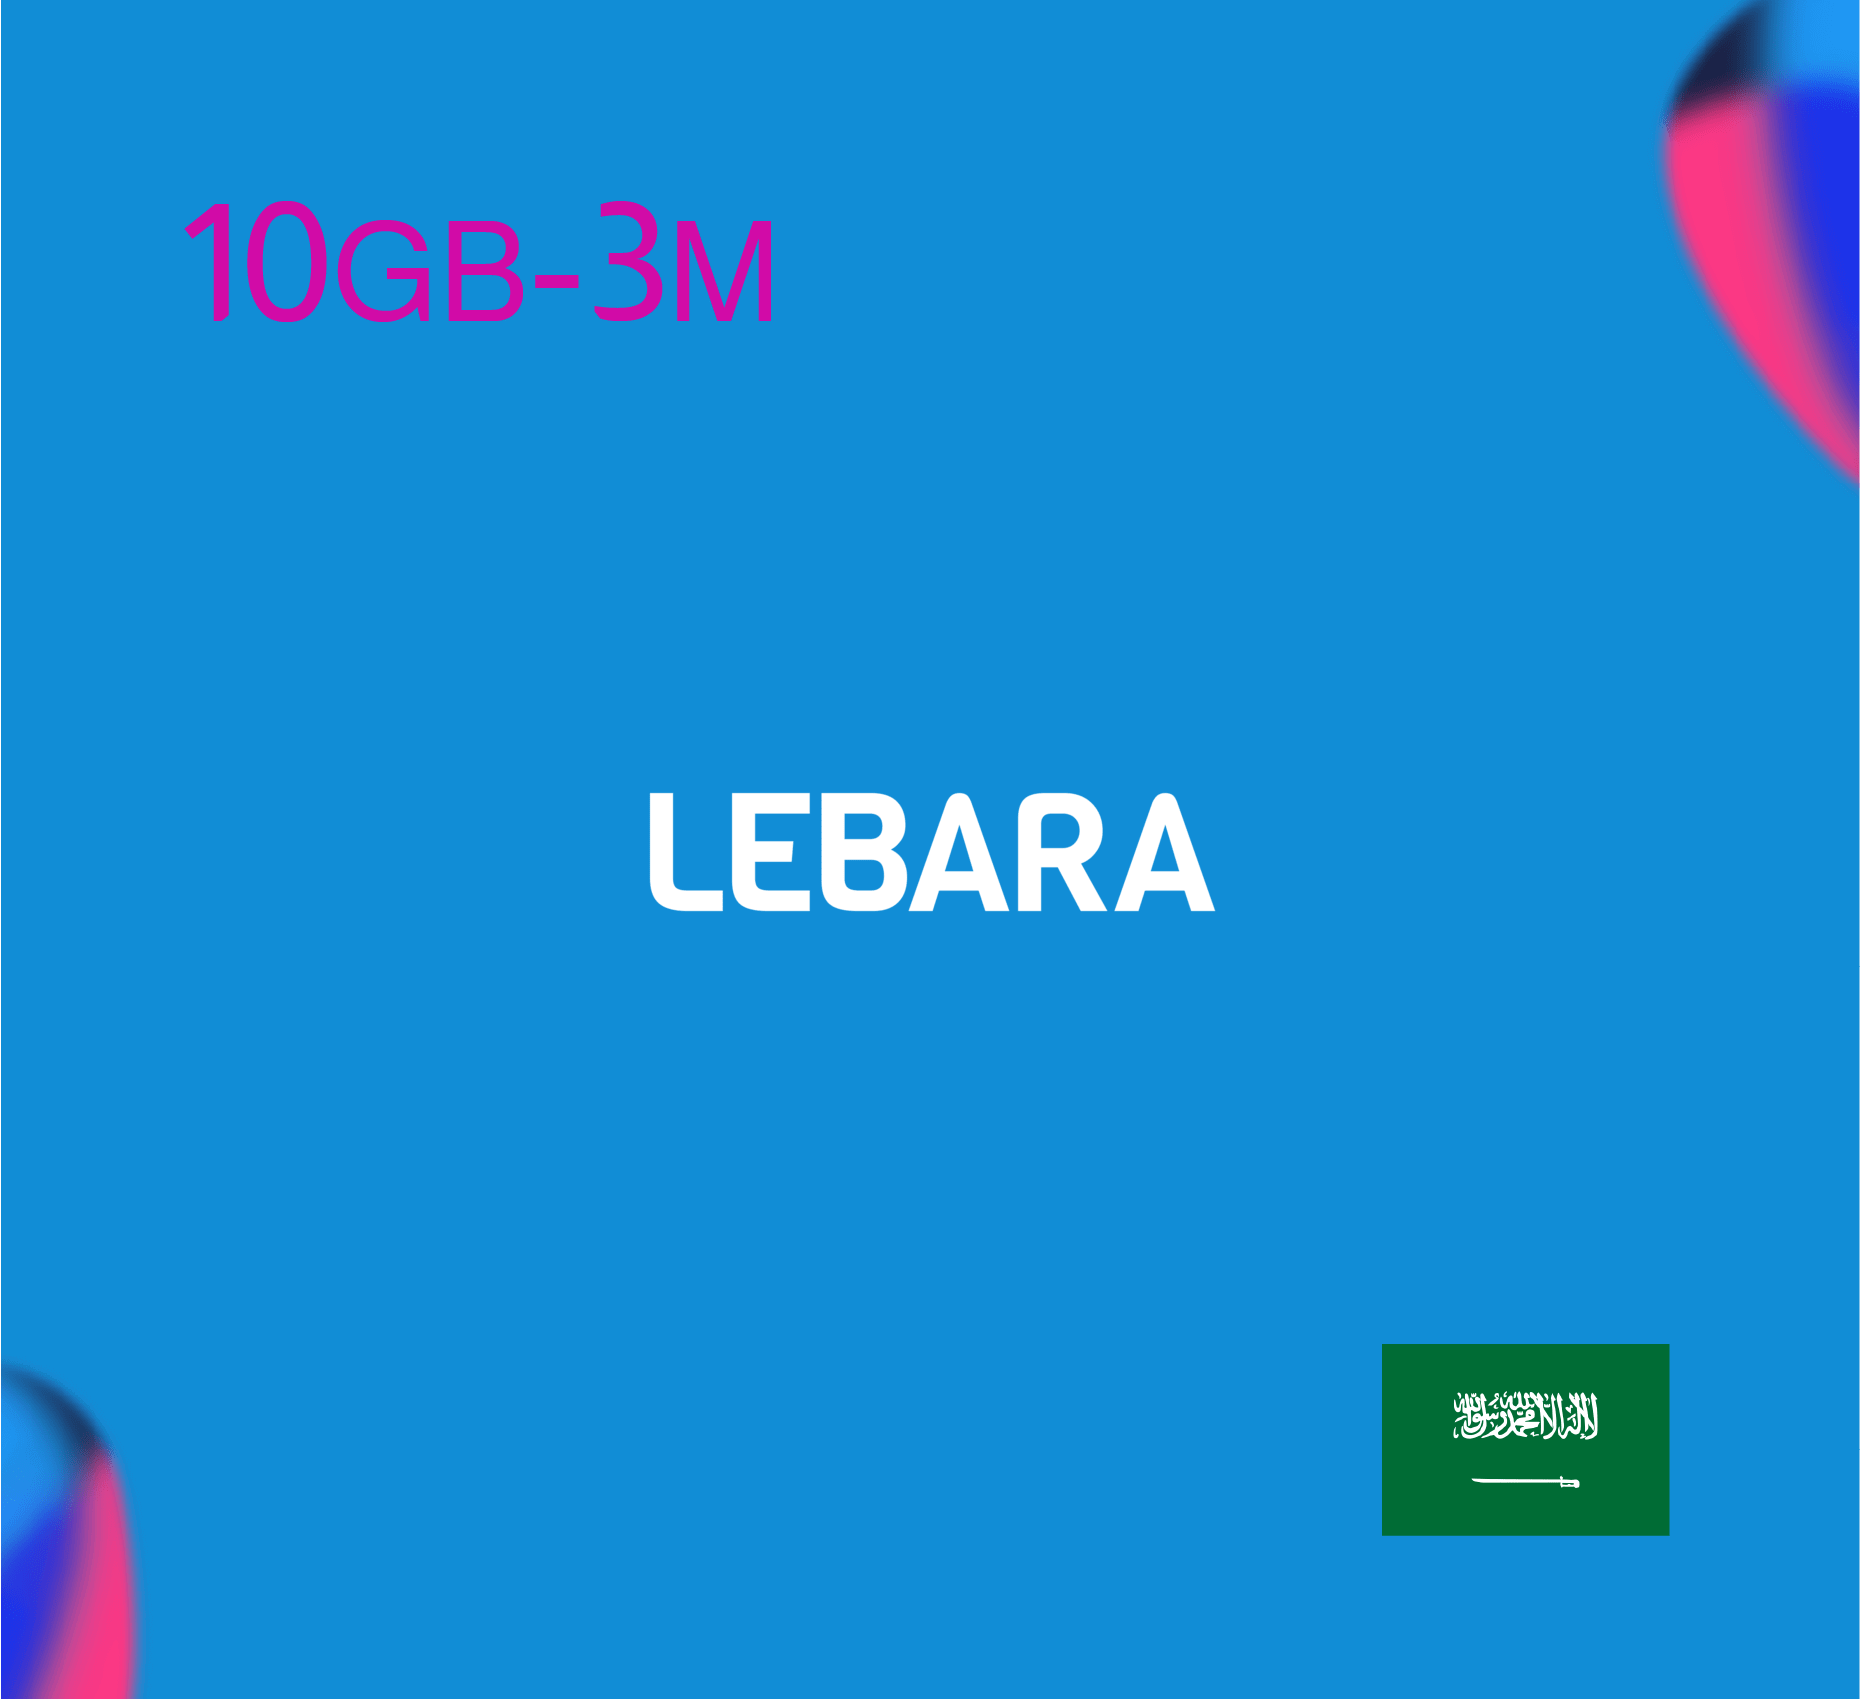 Lebara Data Recharge 10 GB - 3 Months